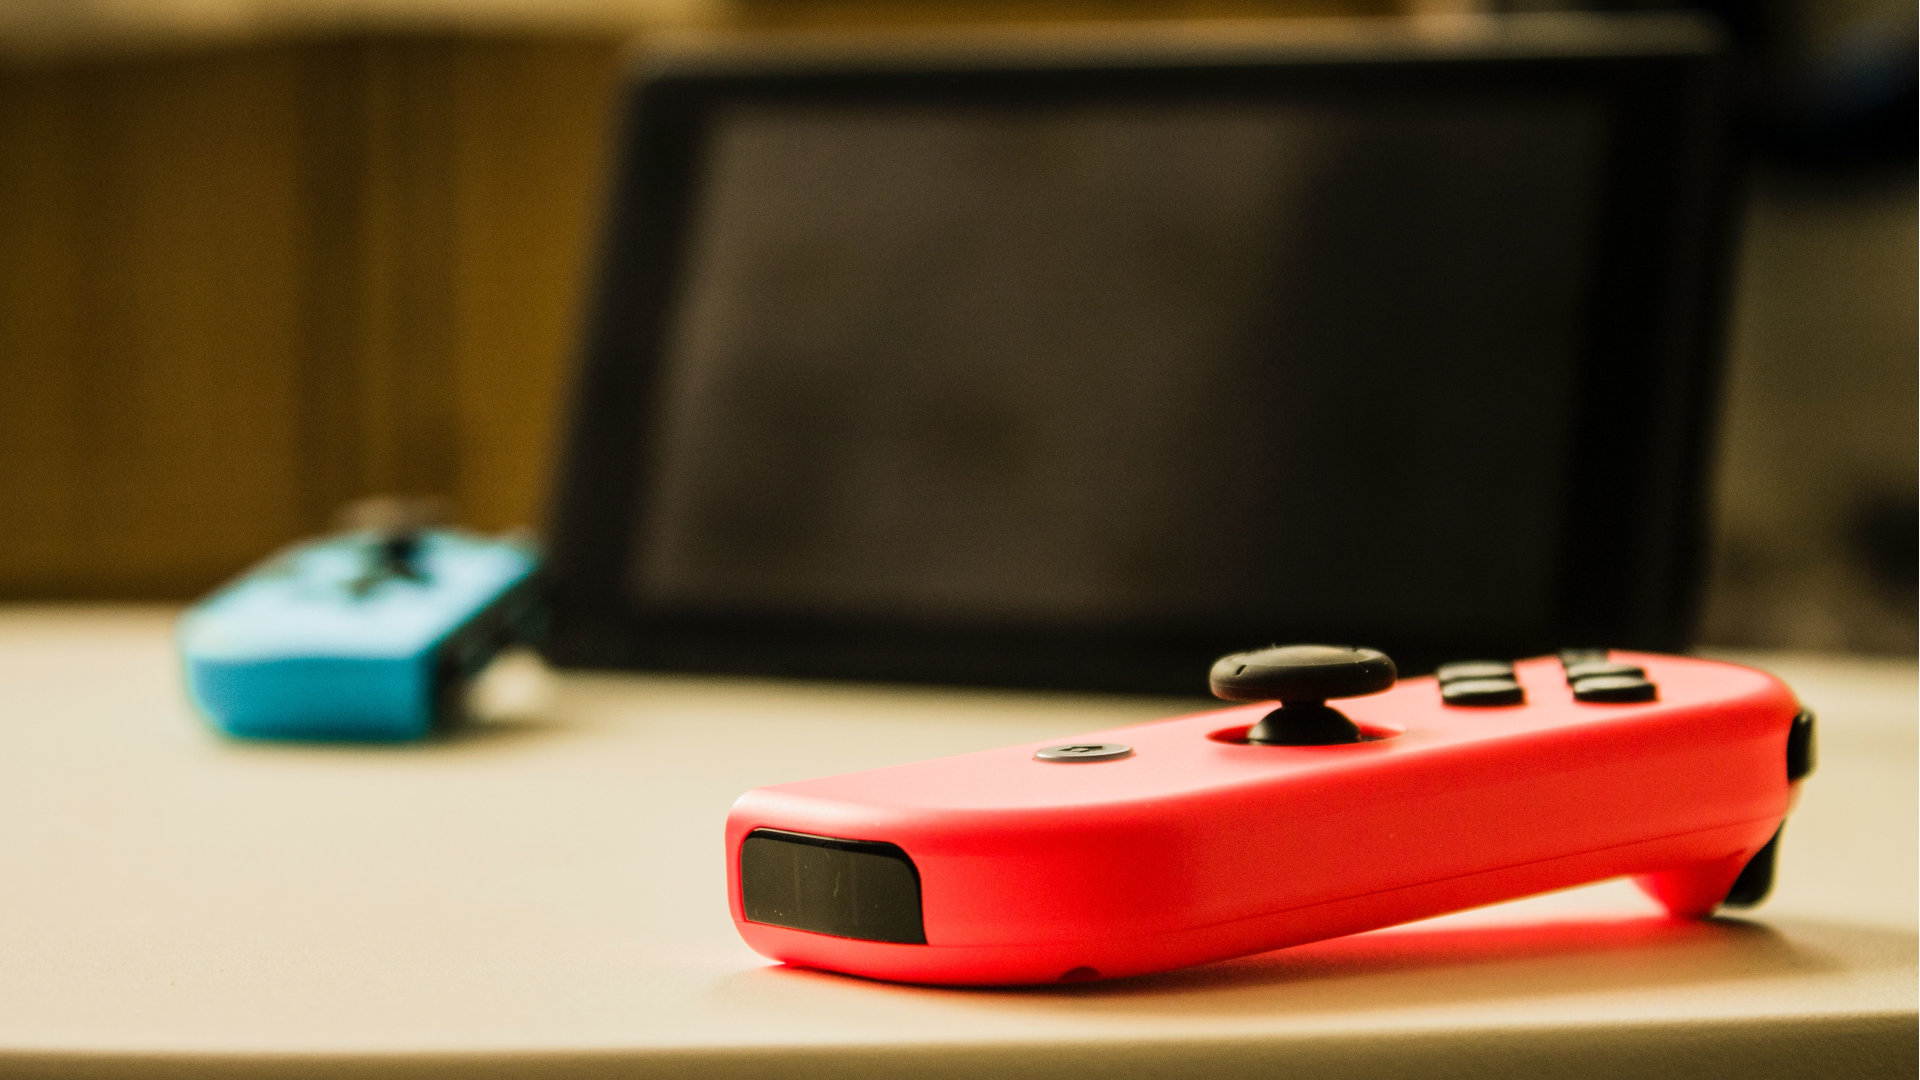 Joy-Con merah neon di atas meja di latar depan, dengan layar Nintendo Switch dan Joy-Con biru tergeletak di atas meja di latar belakang, sedikit di luar fokus